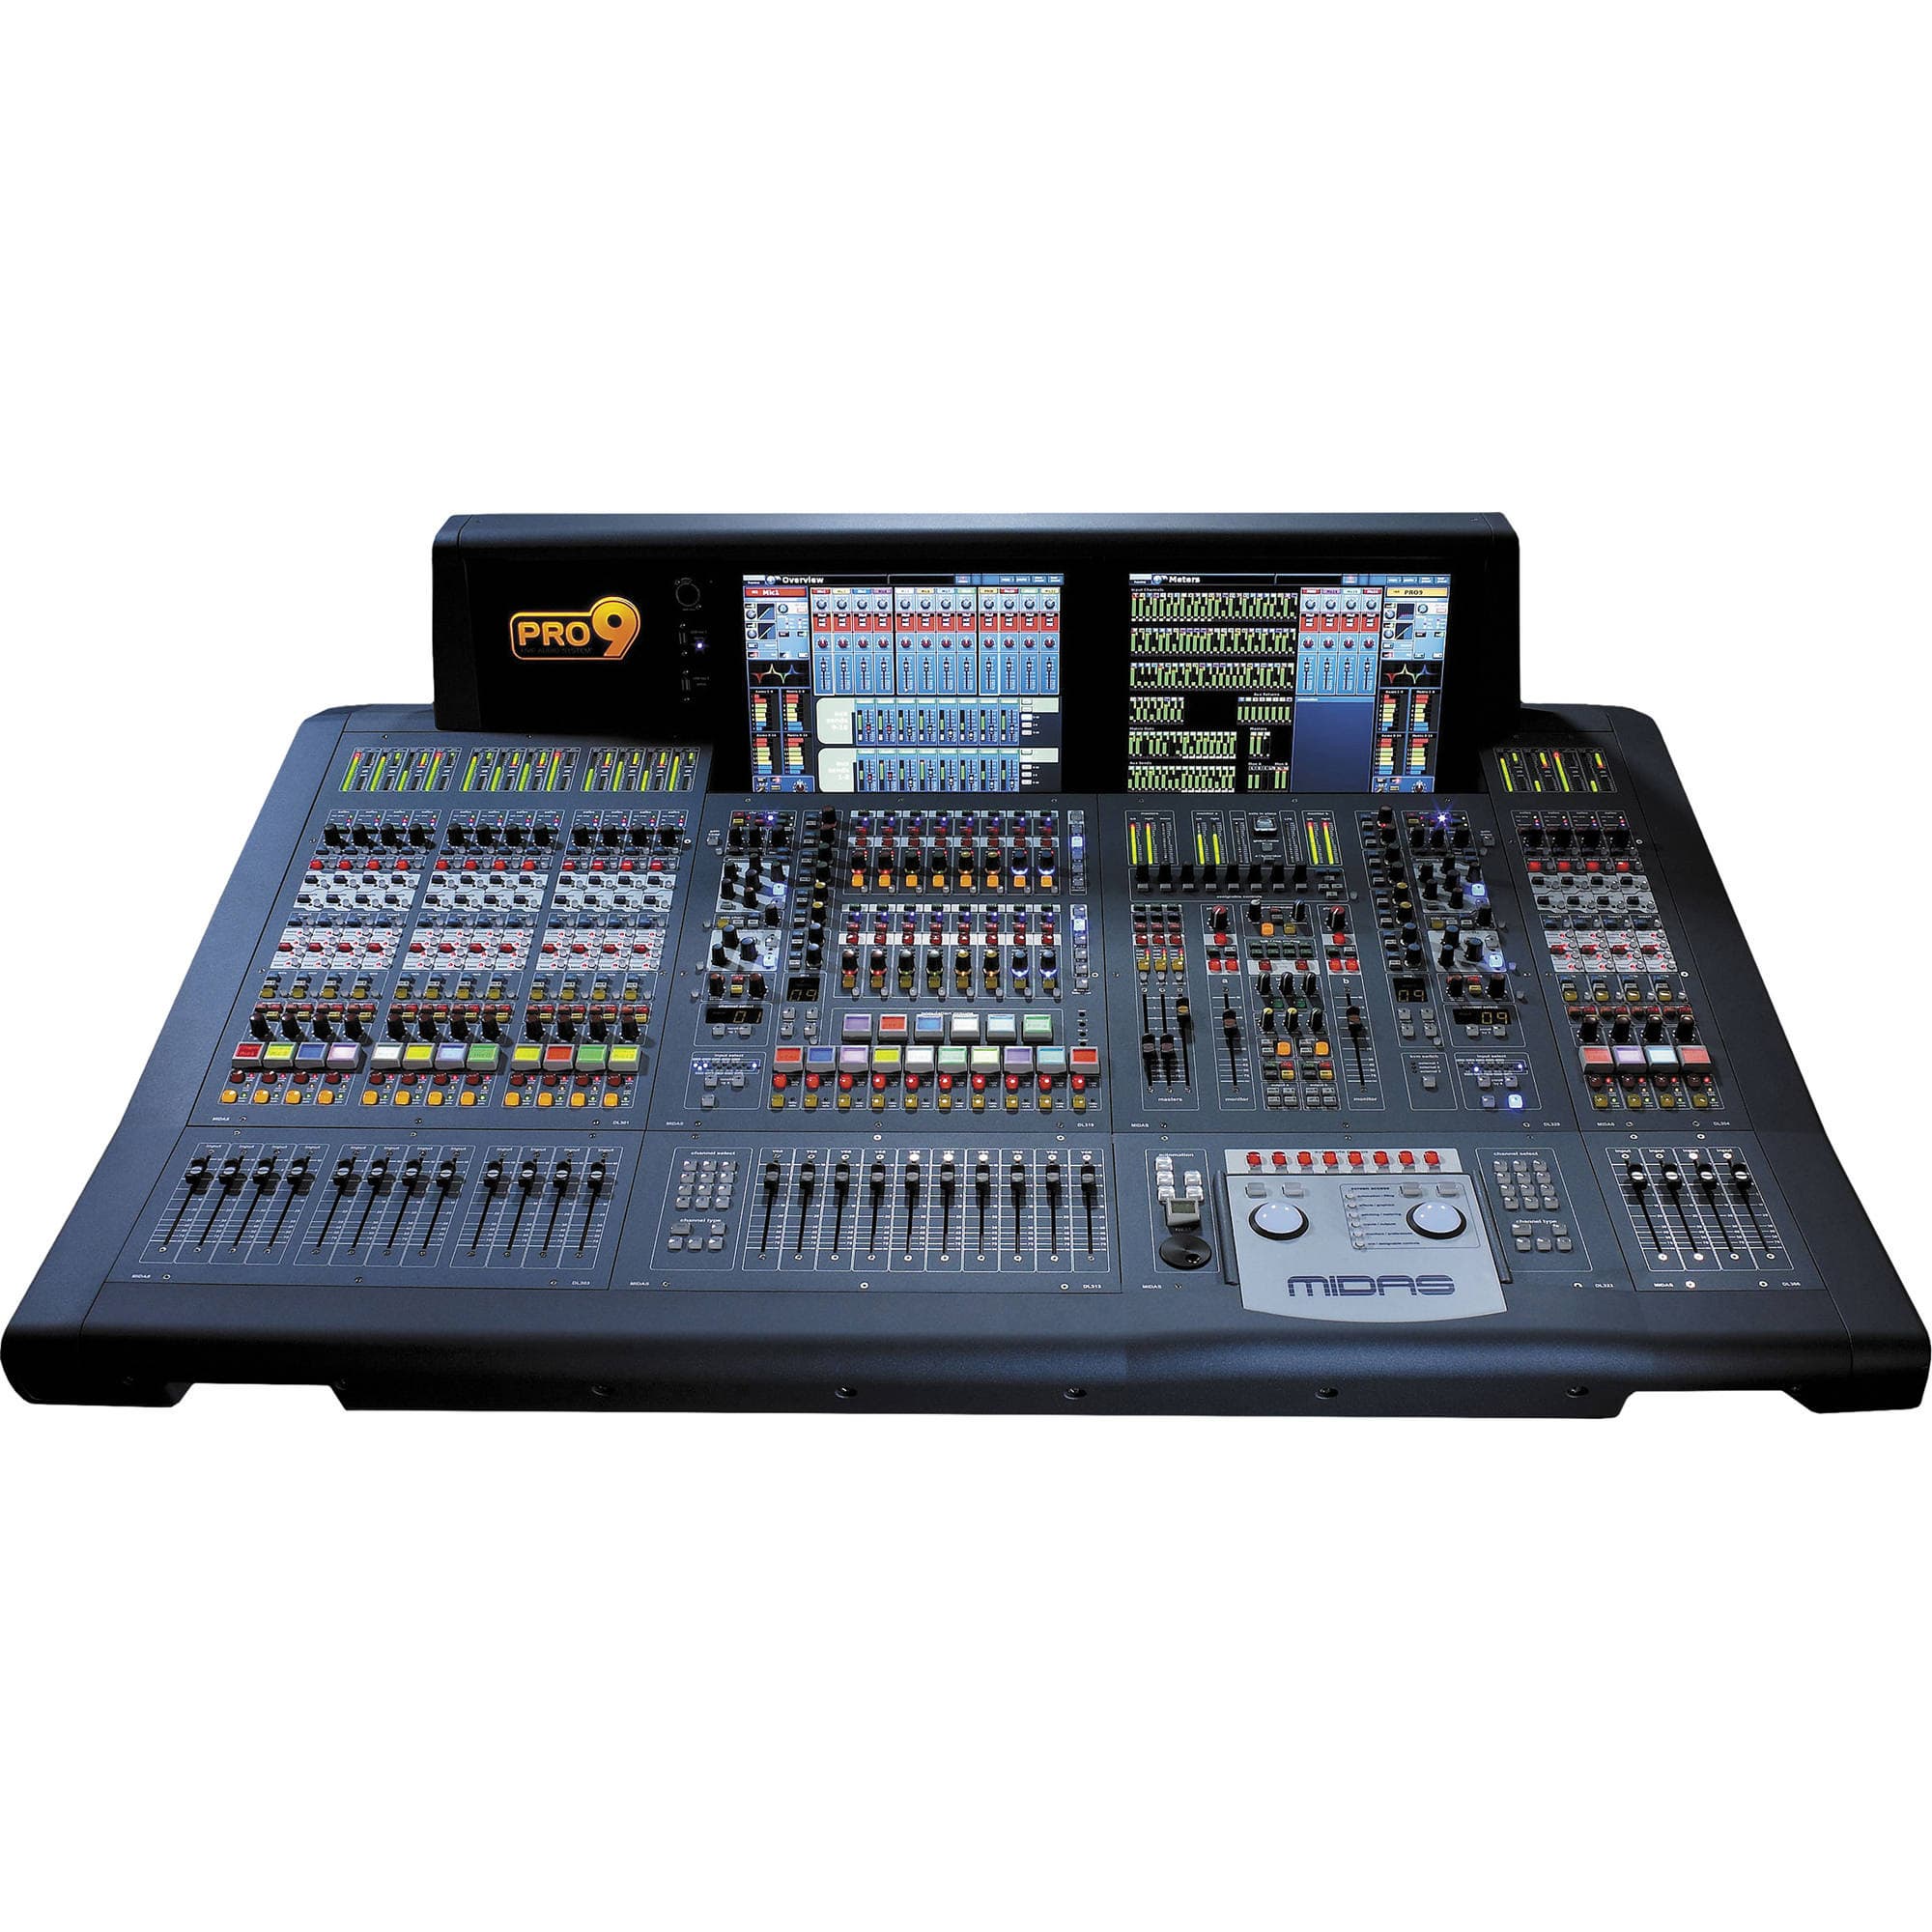 Audio Mixing System original in store